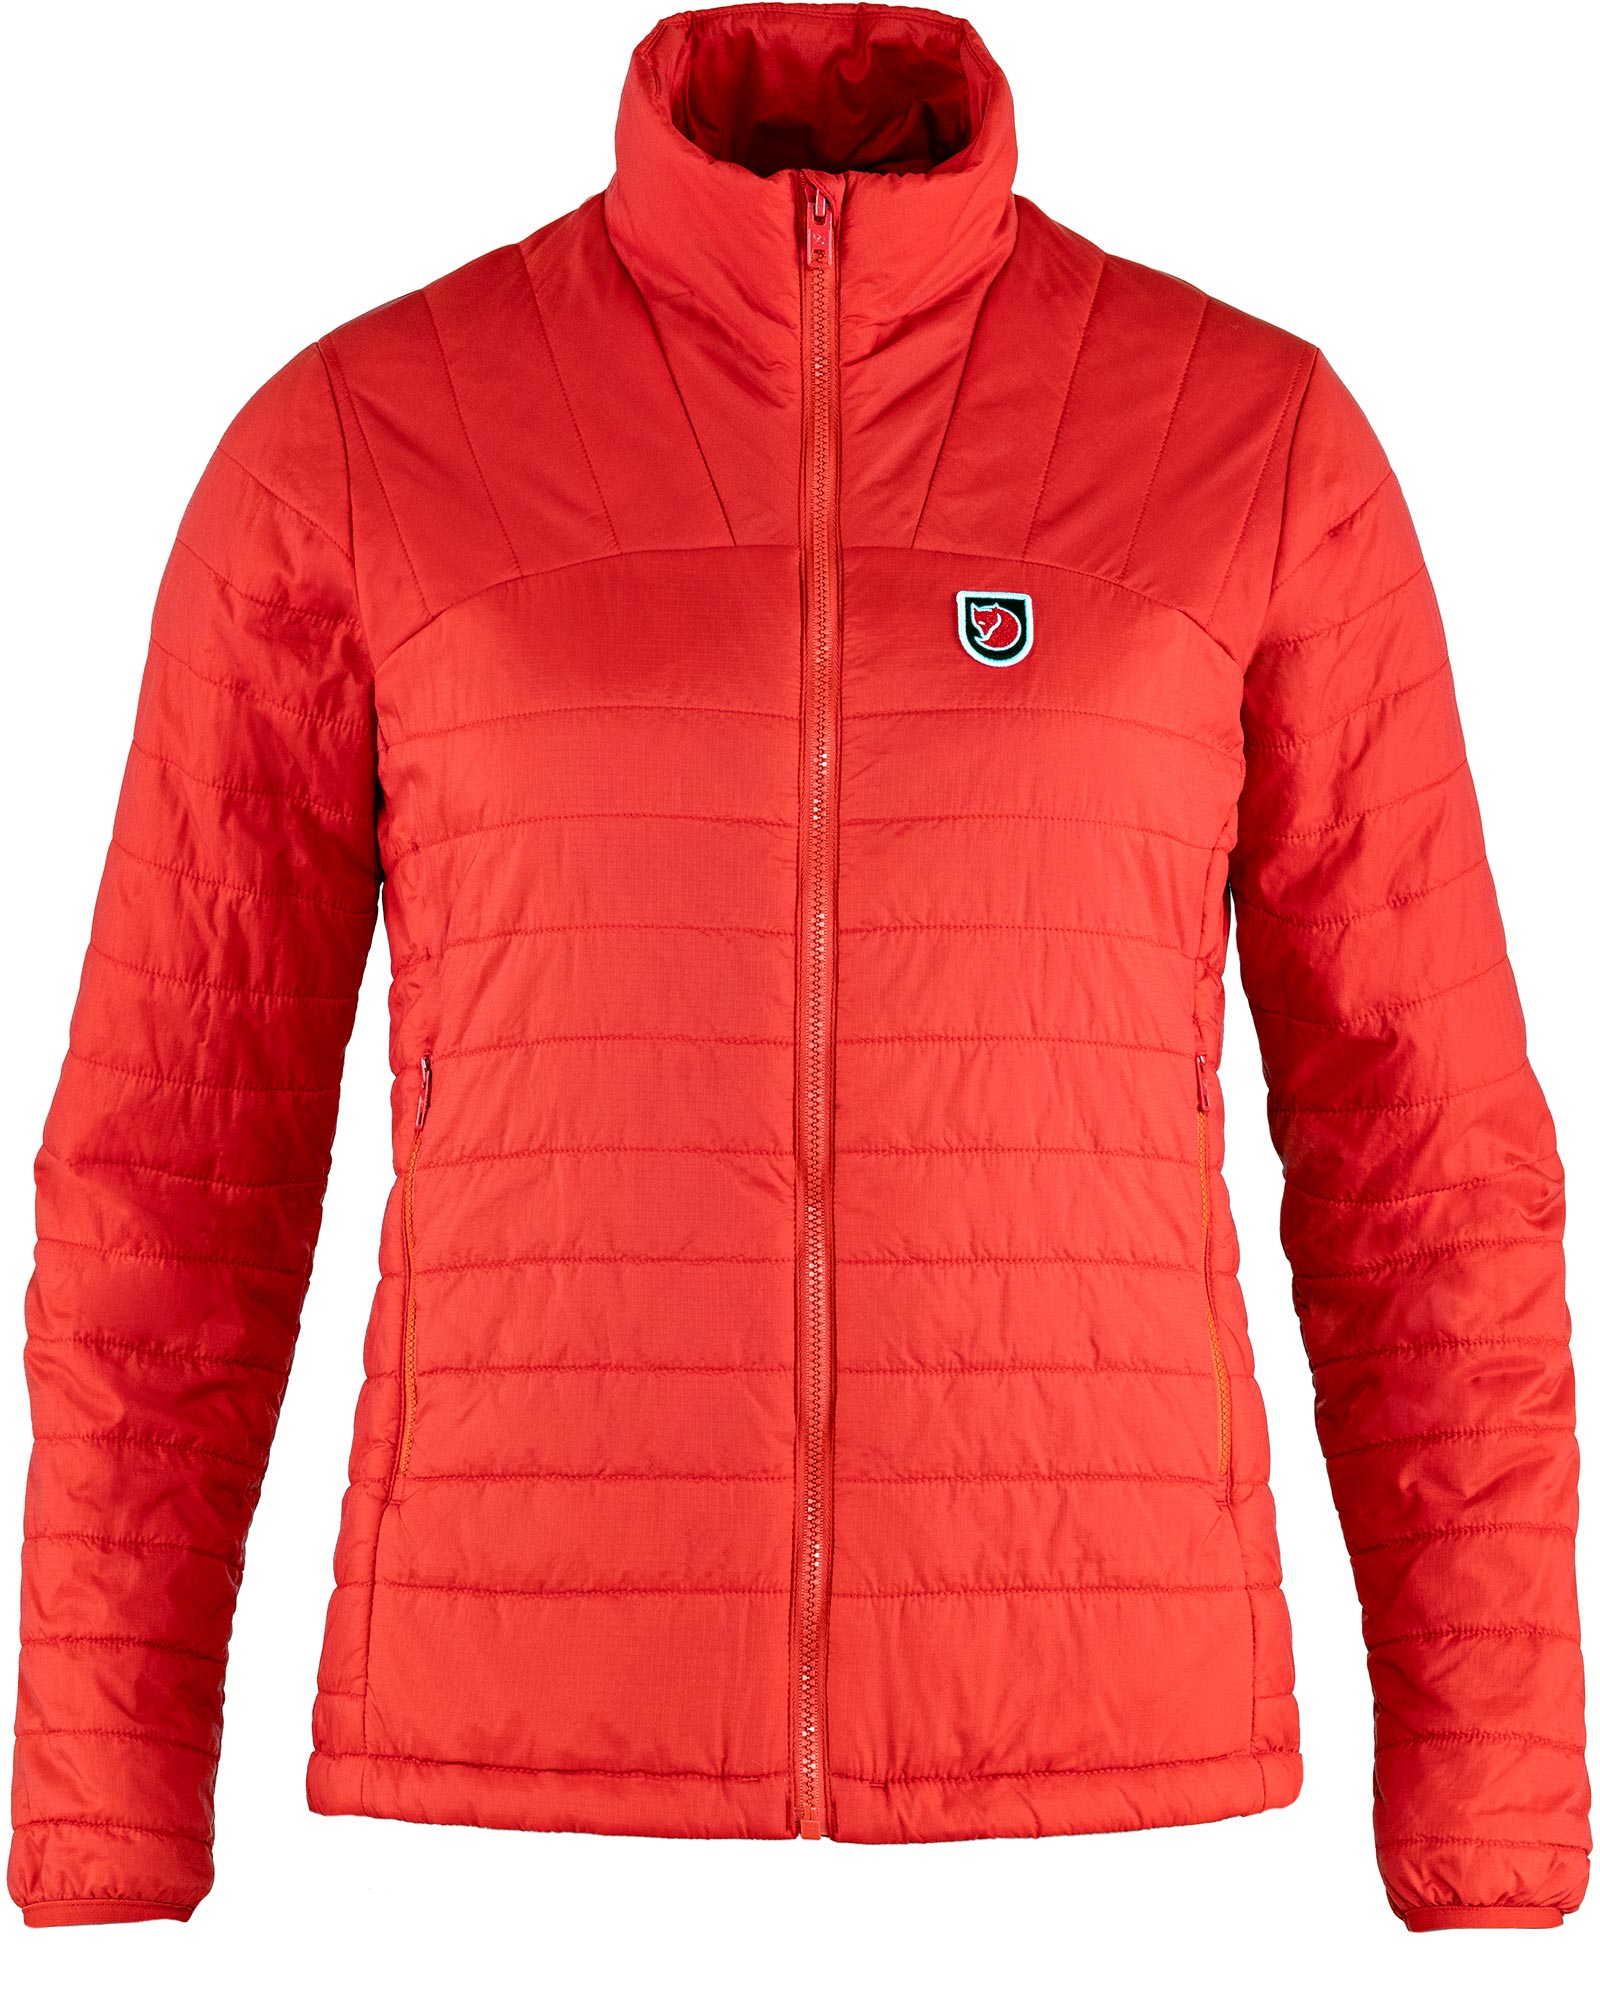 Fjallraven Expedition Latt Women’s Insulated Jacket - True Red M